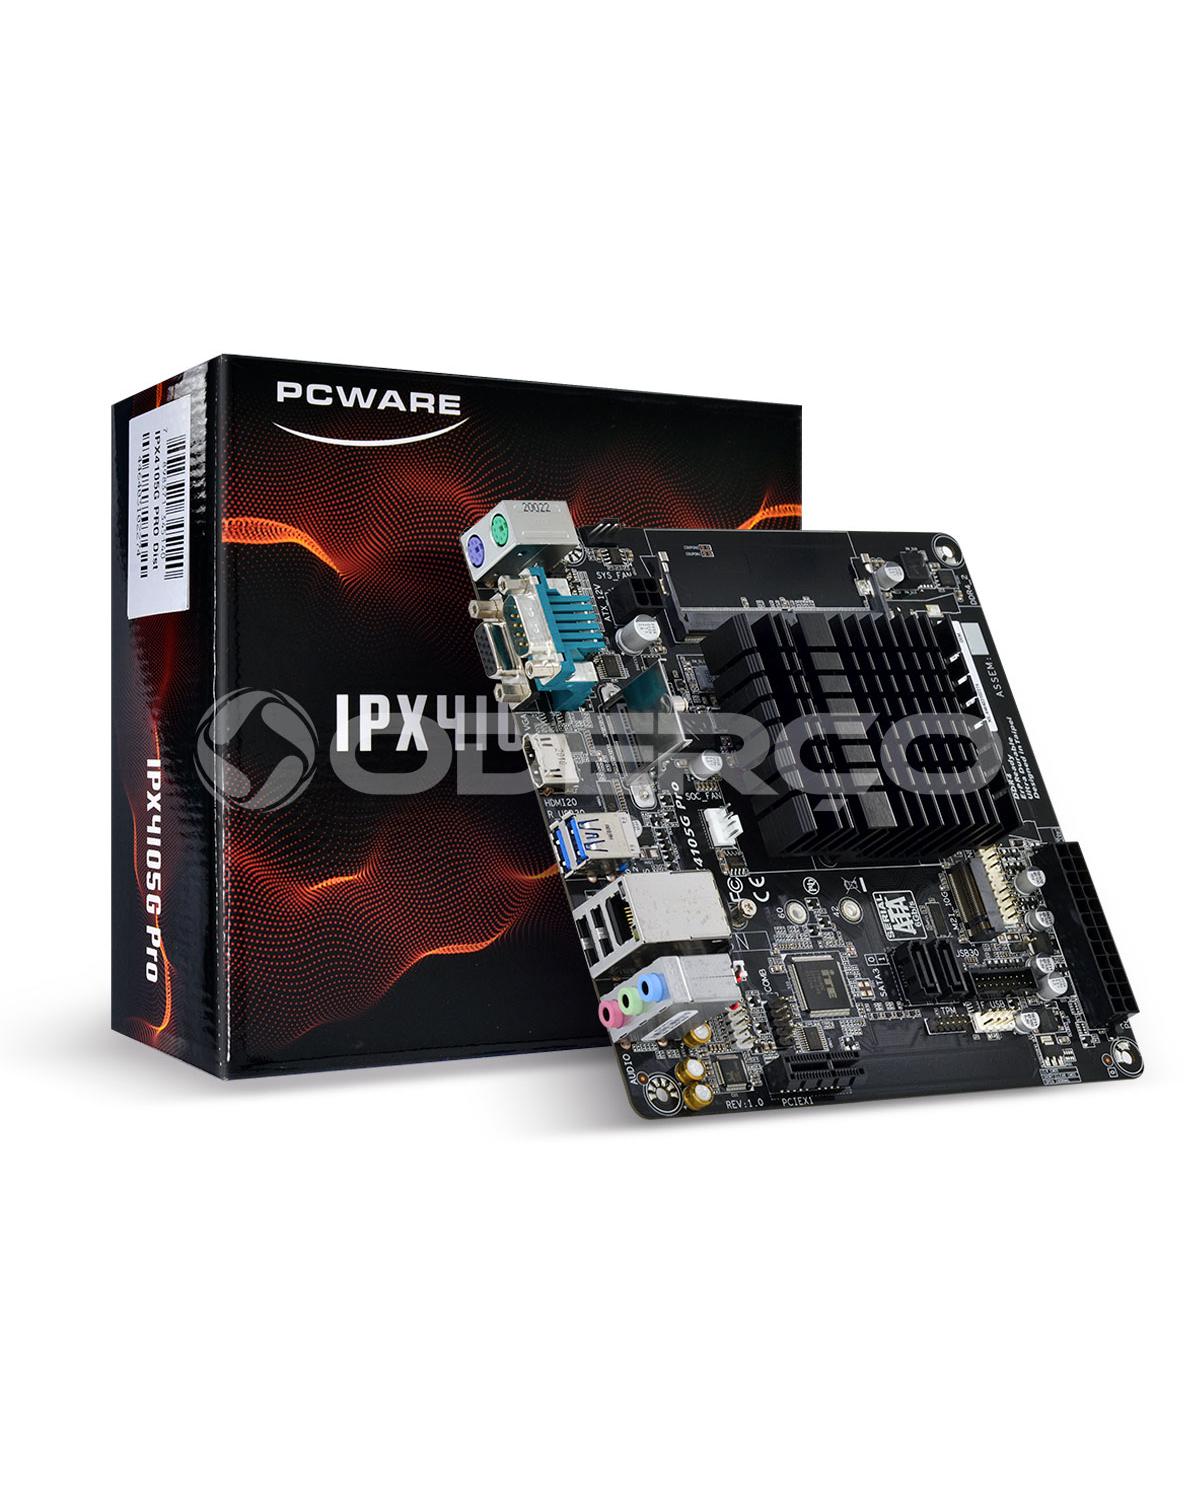 PLACA MÃE MINI ITX IPX4105G PRO PROCESSADOR J4105 1.5GHZ INTEGRADO DDR4 SODIMM 10/100/1000, 2XUSB 3.0,2XUSB 2.0,HDMI,VGA